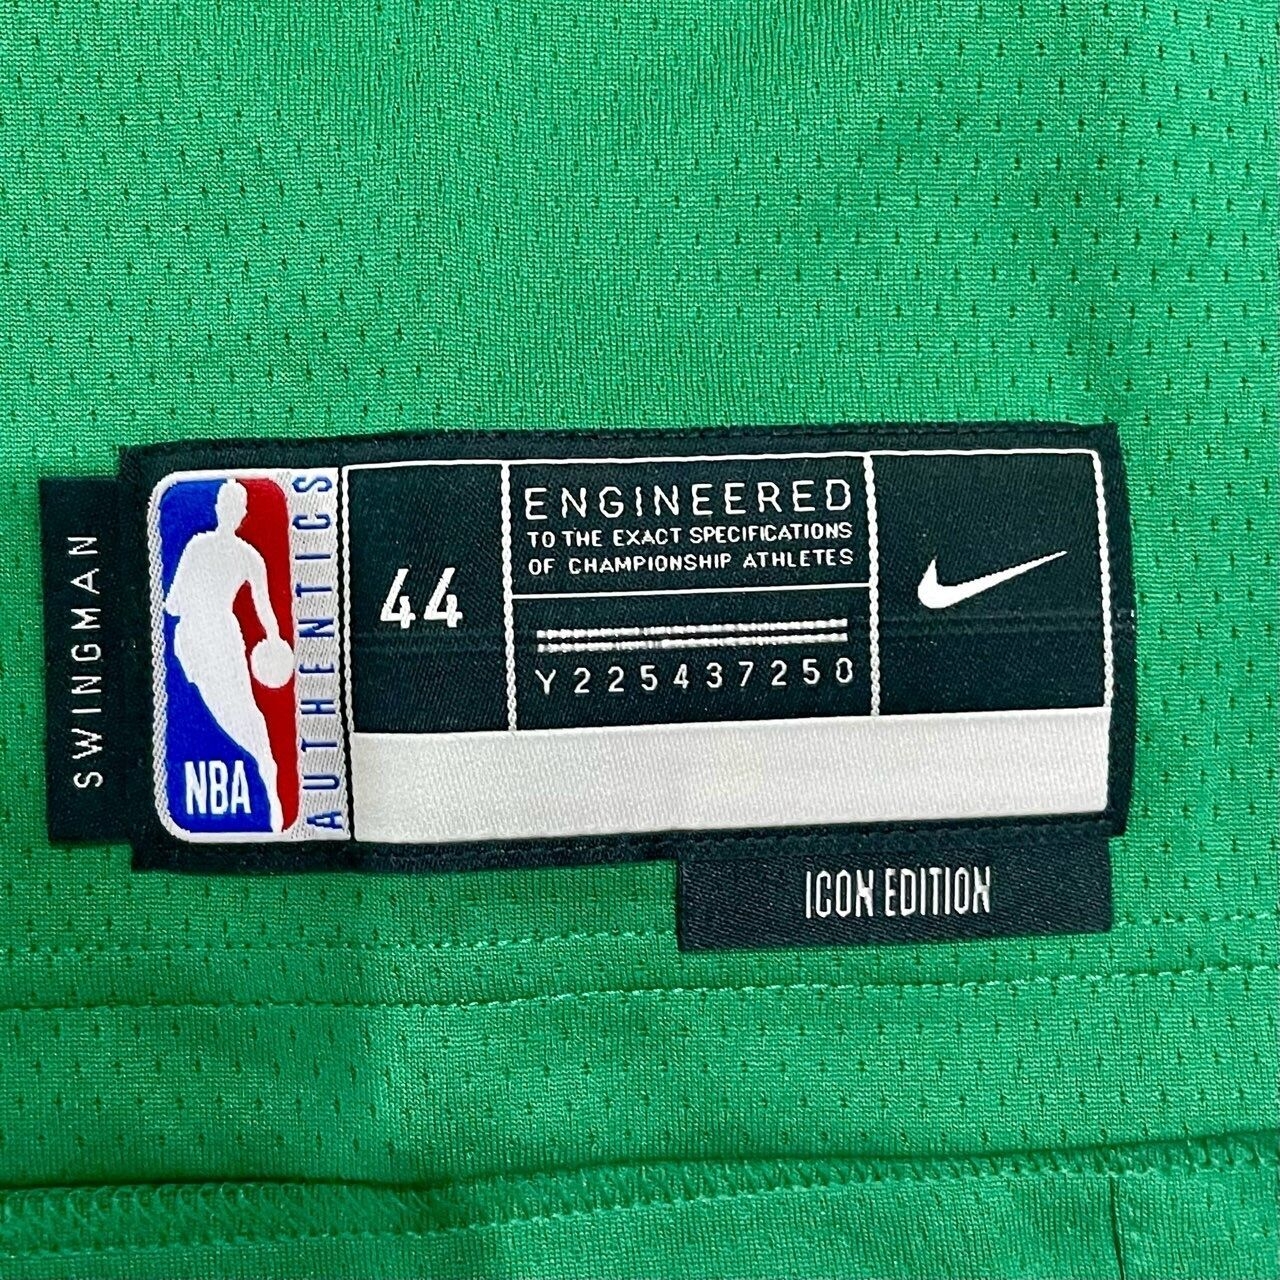 Nike Basketball Boston Celtics Jersey Jayson Tatum